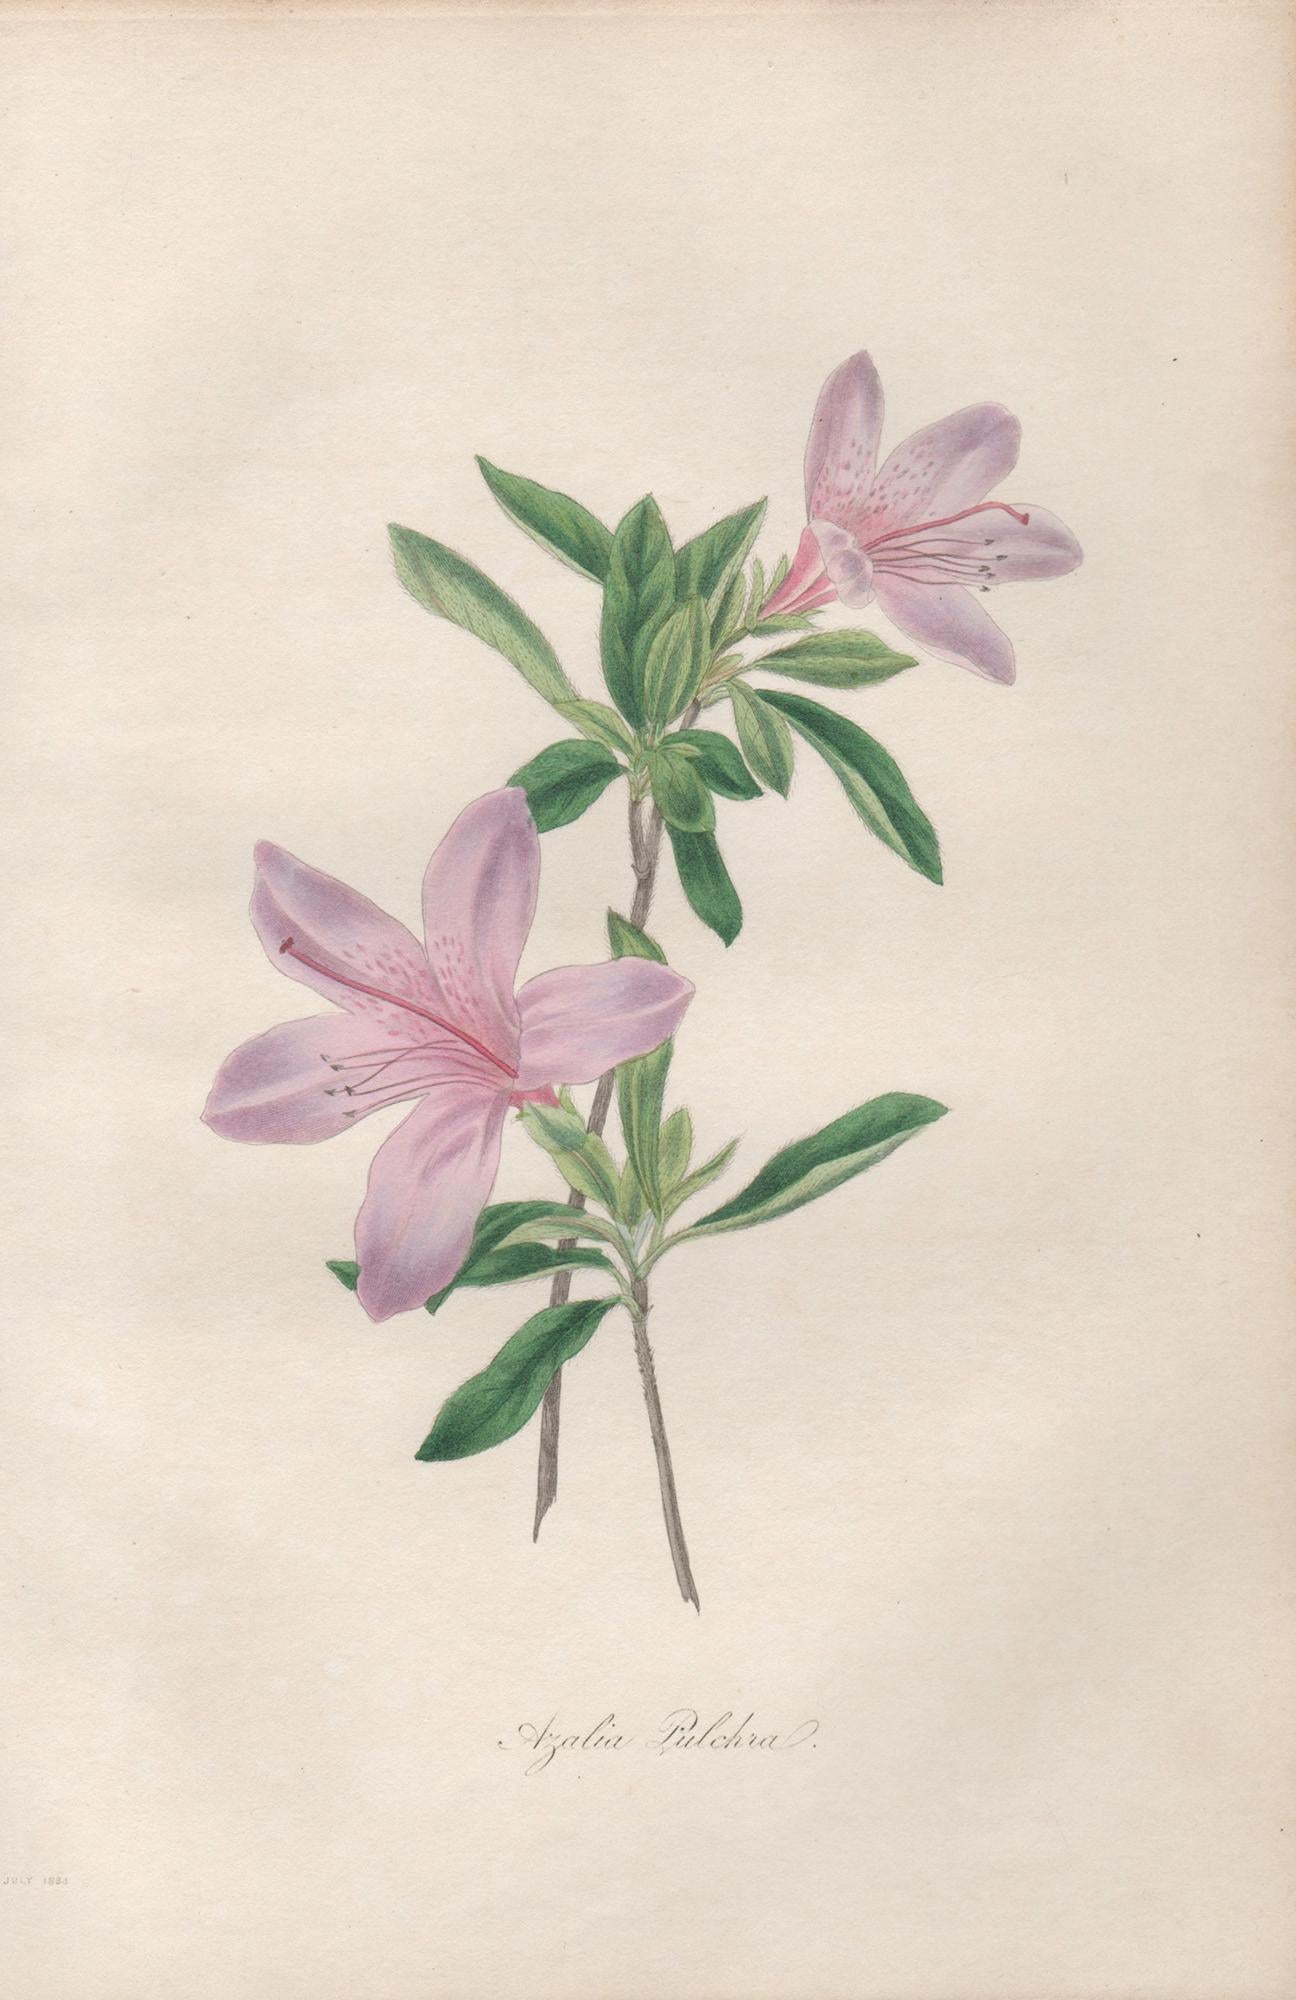 Frederick William Smith Print - Azalea Pulchra, antique botanical flower engraving